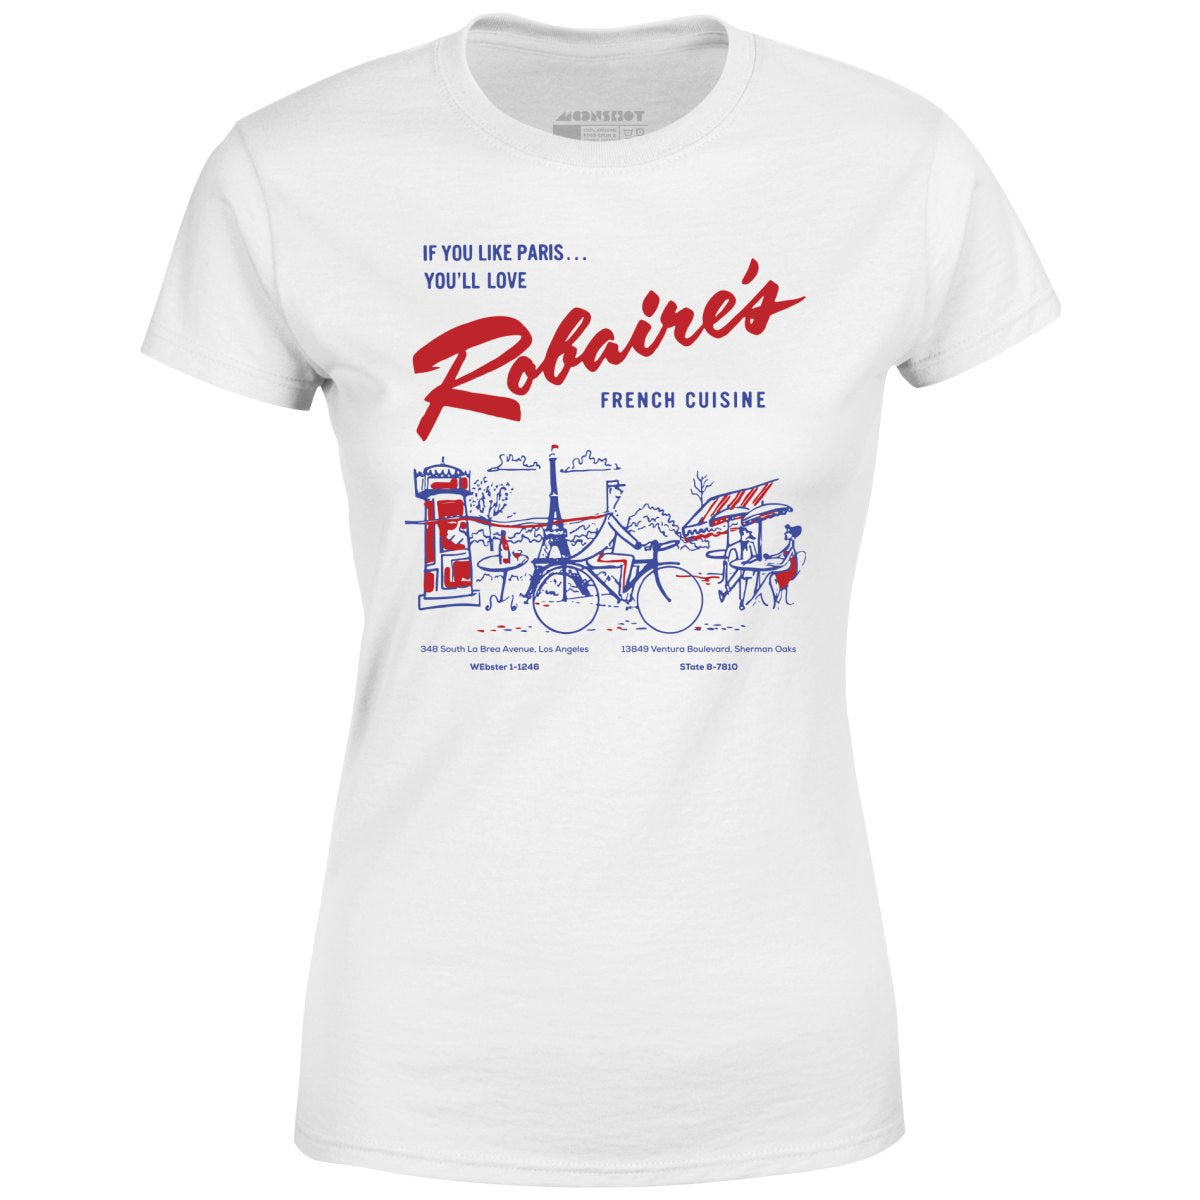 Robaire's French Cuisine - Los Angeles, CA - Vintage Restaurant - Women's T-Shirt